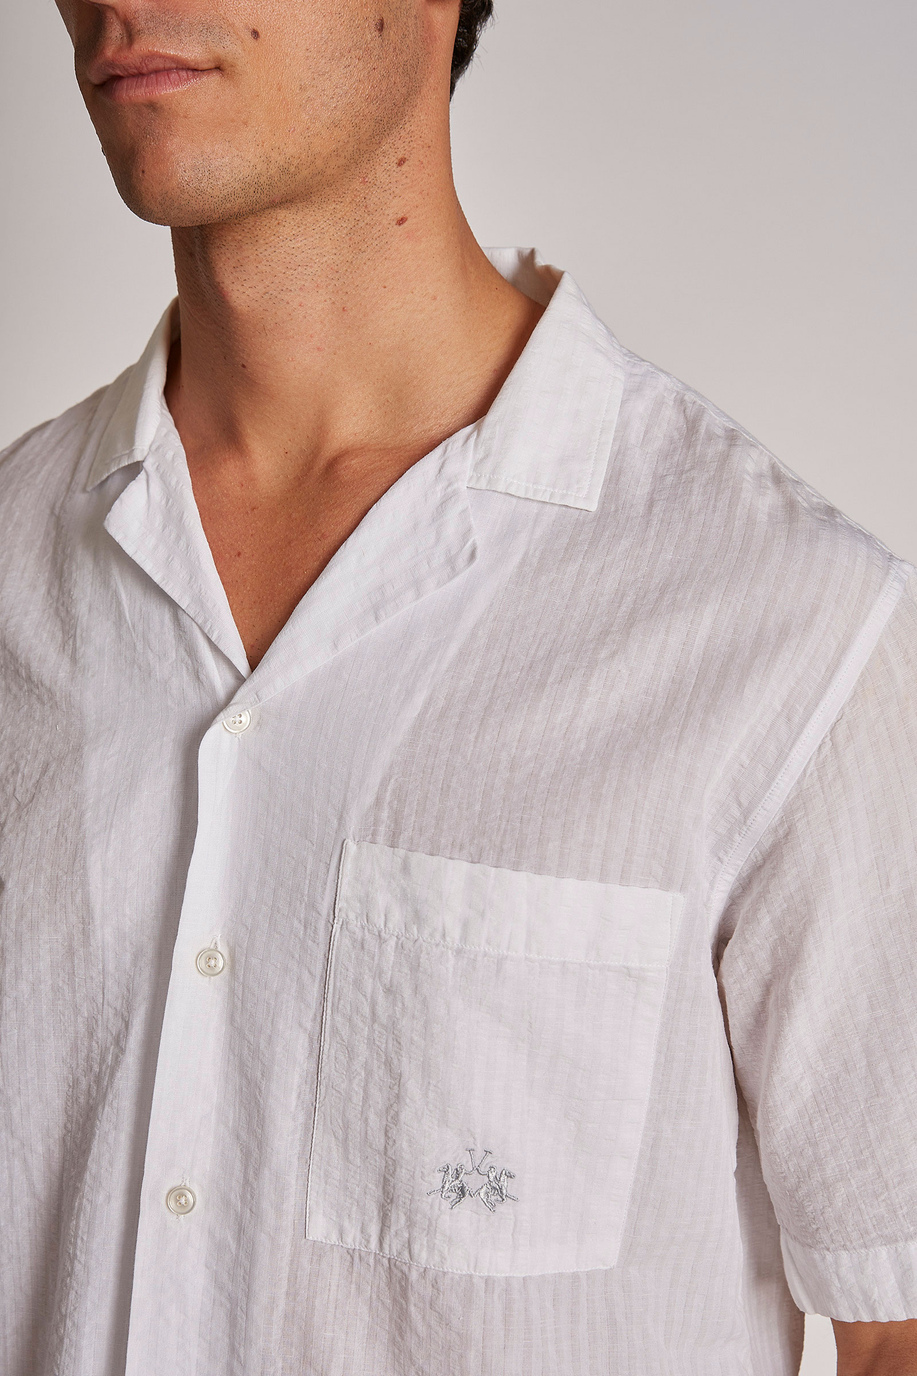 Men's short-sleeved, regular-fit cotton shirt